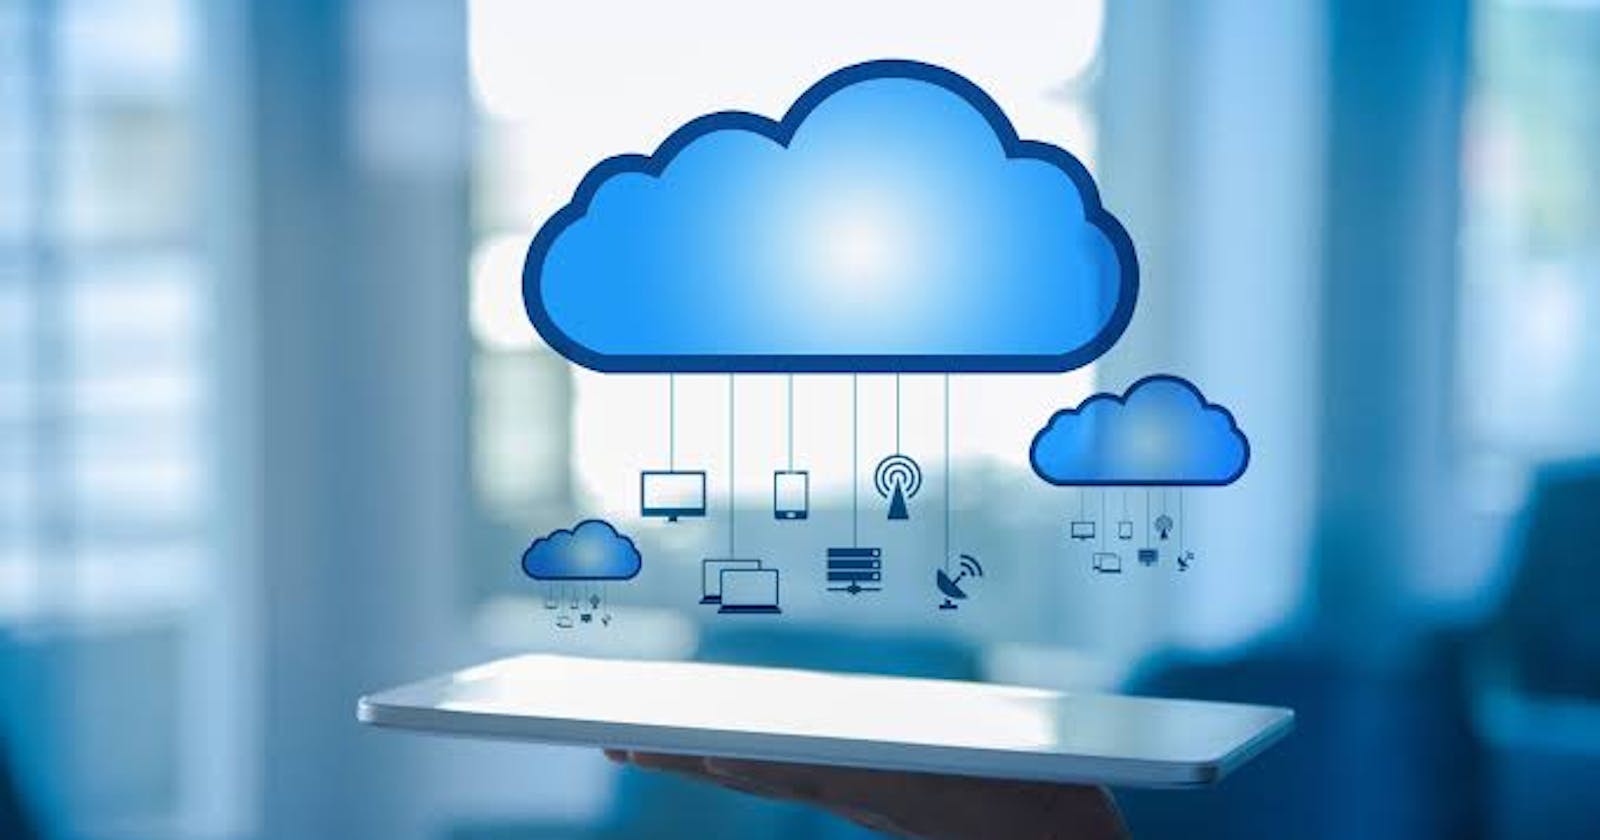 Cloud Computing Importance